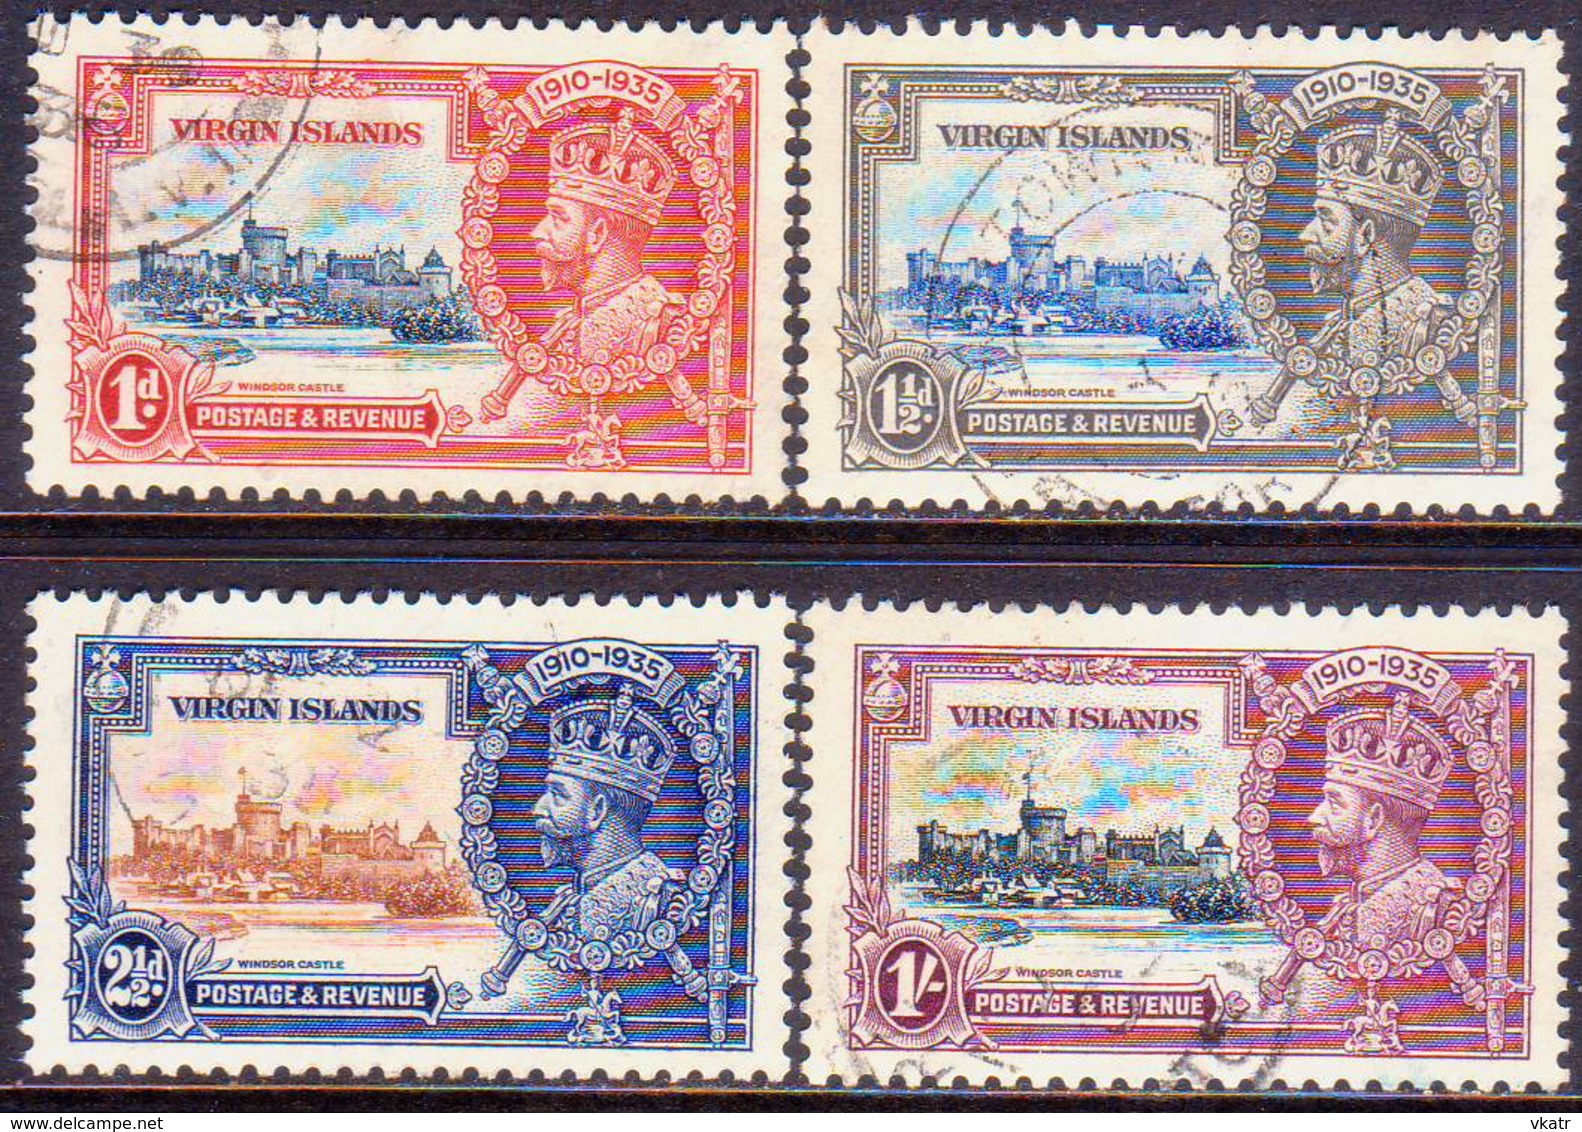 BRITISH VIRGIN ISLANDS 1935 SG 103-106 Compl.set Used CV £55 Silver Jubilee - British Virgin Islands